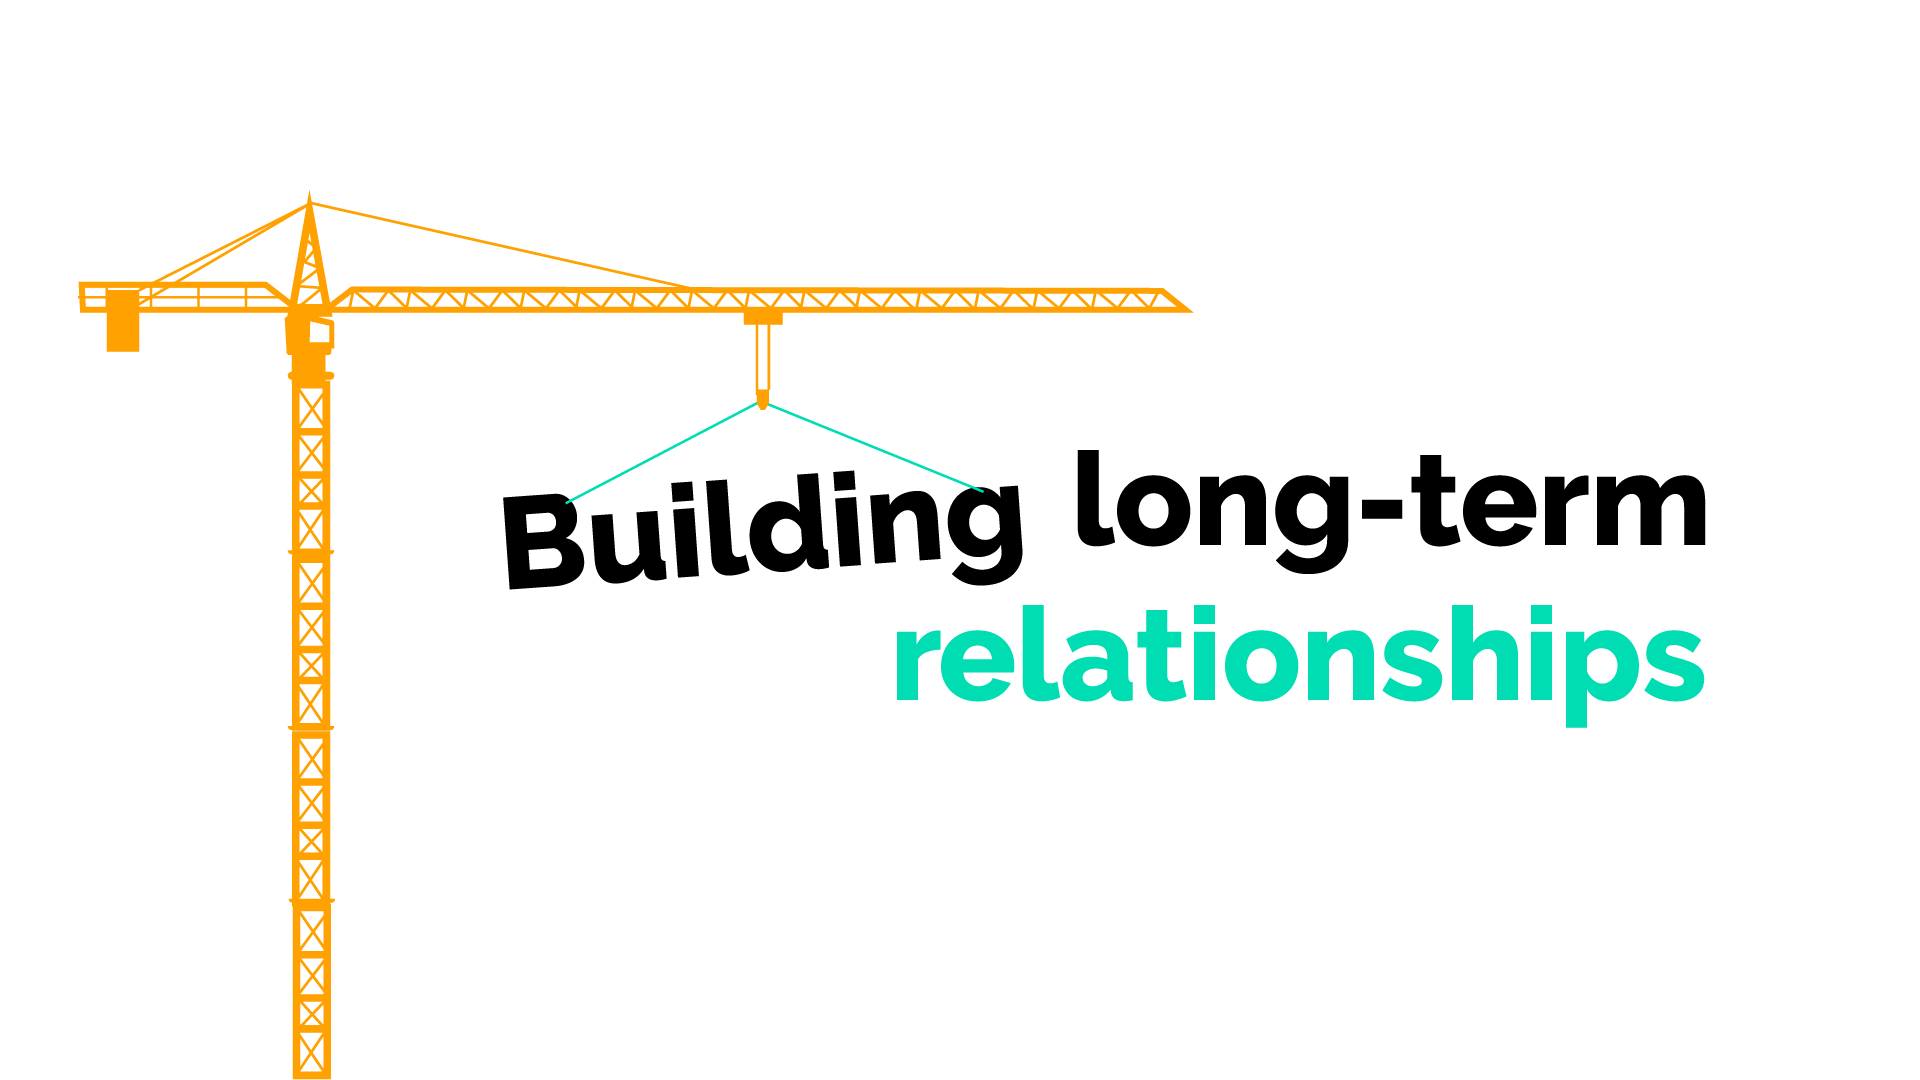 Building long-term relationships